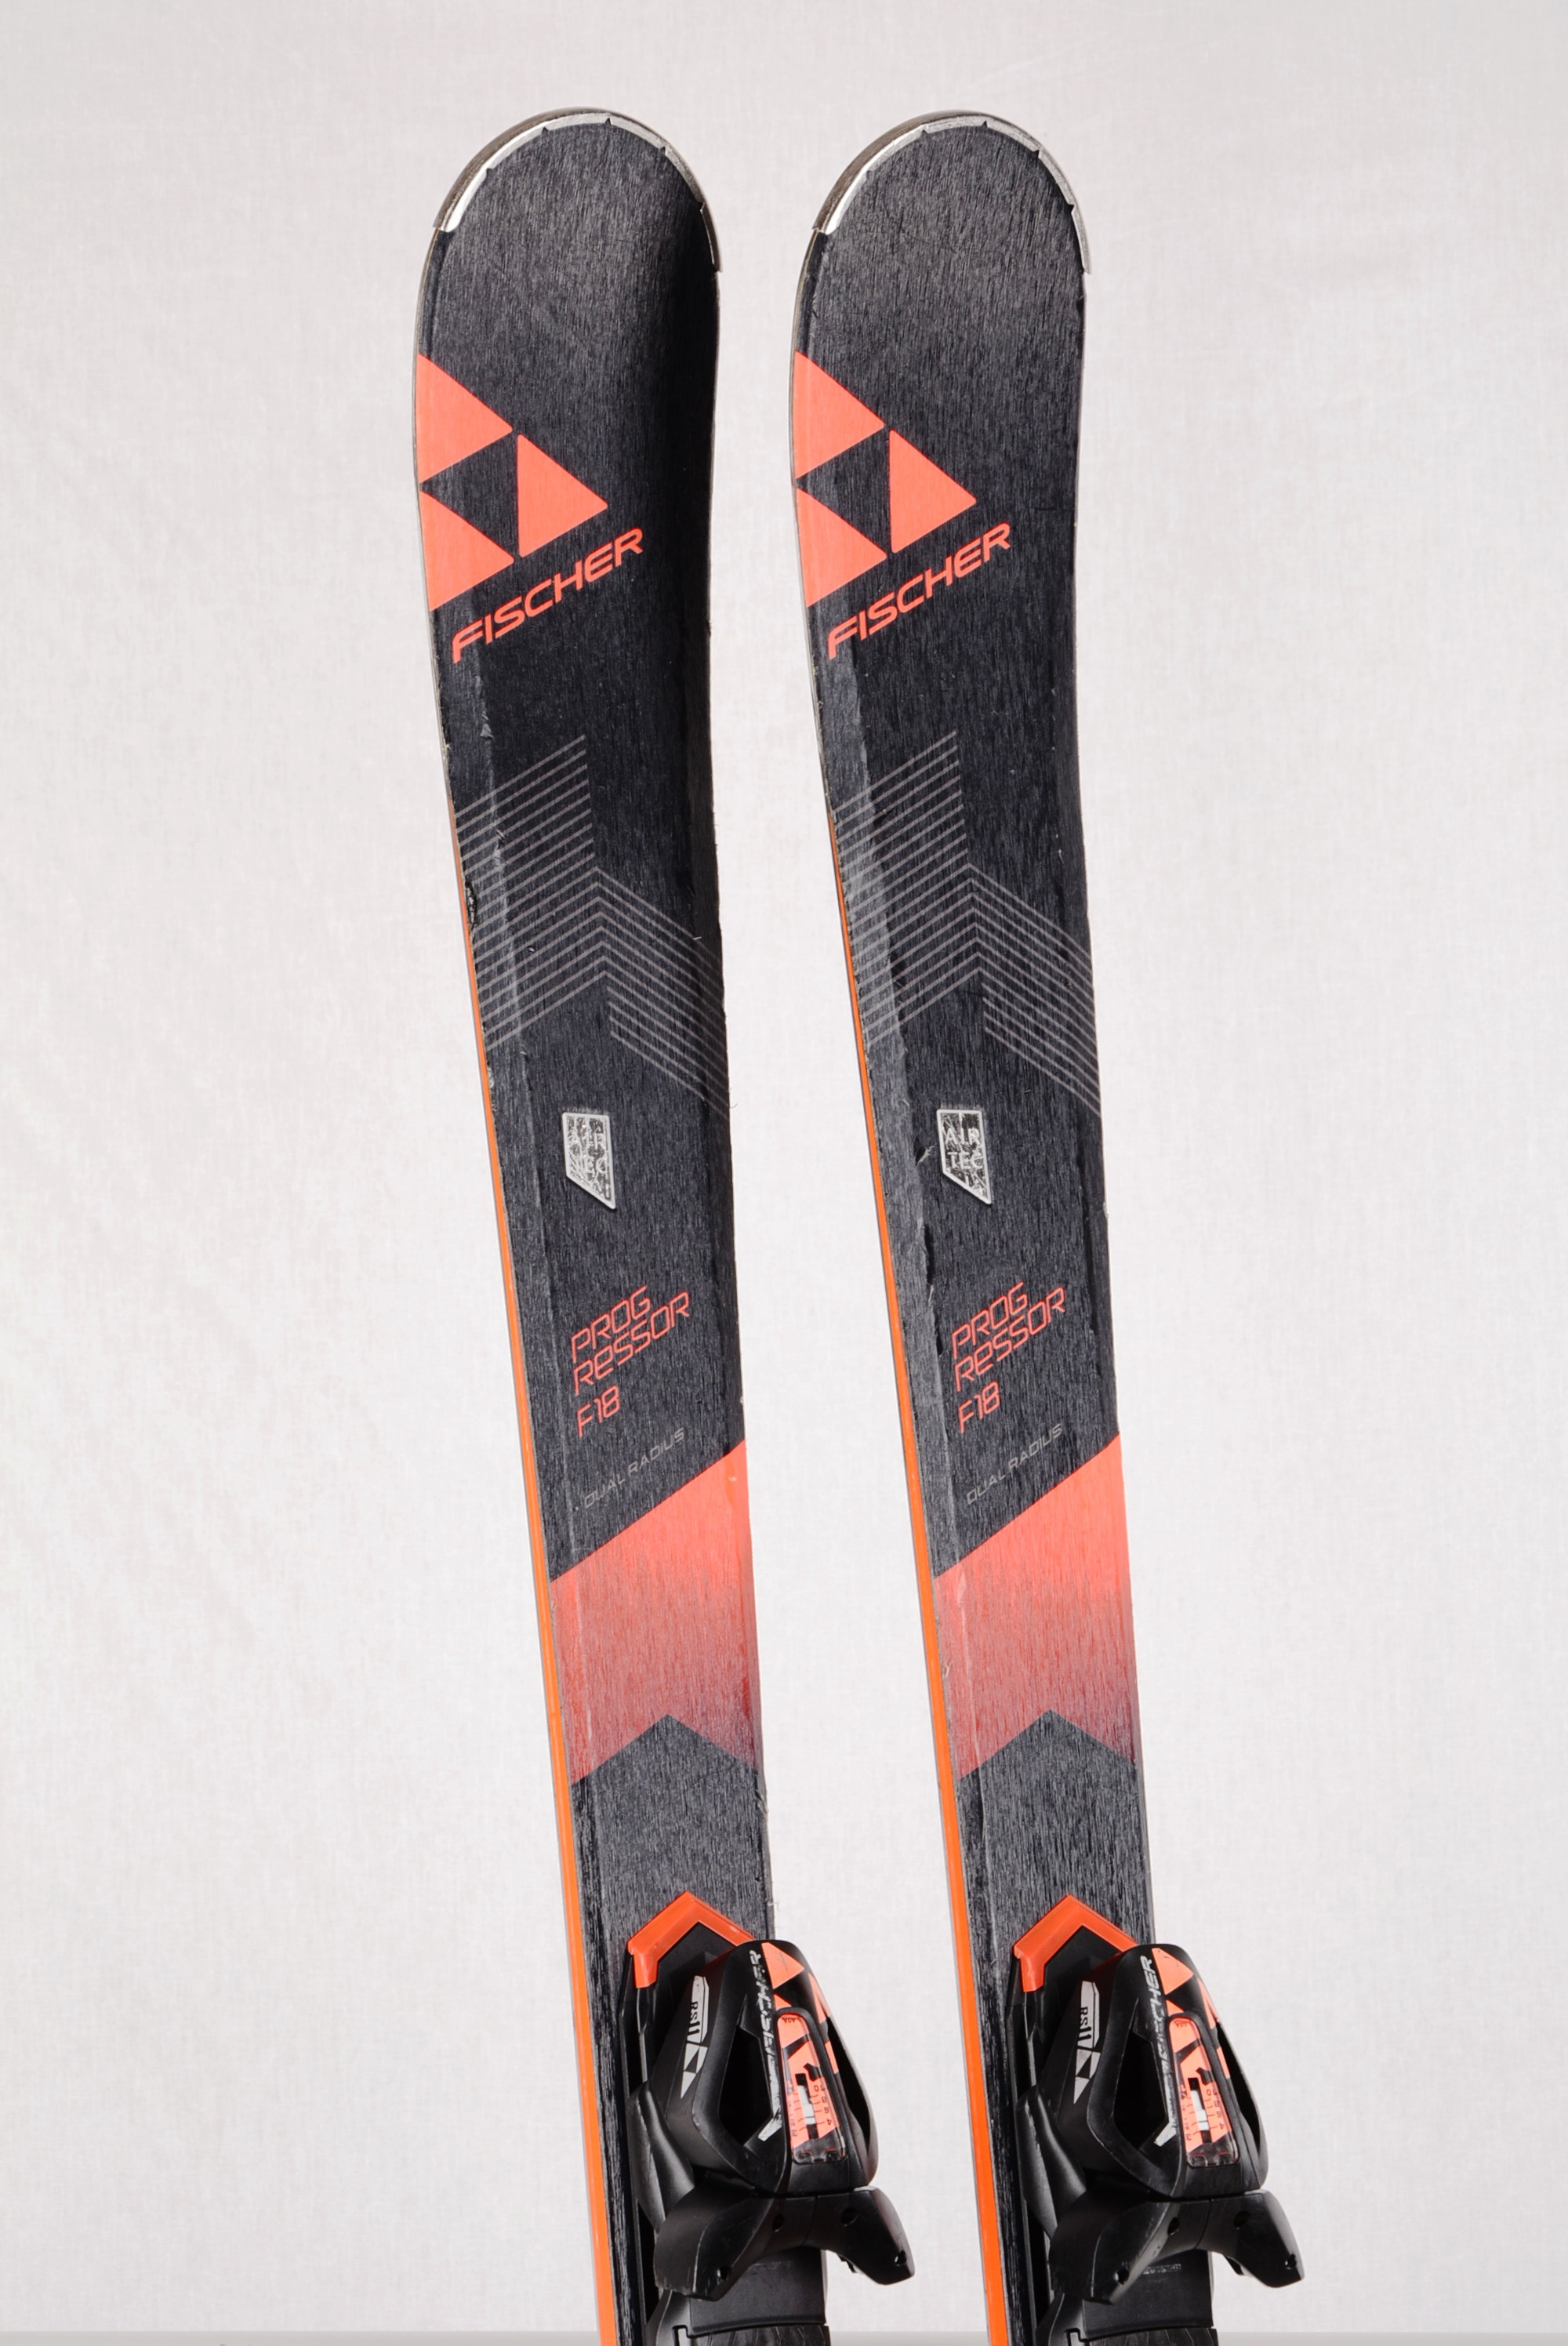 skis FISCHER PROGRESSOR RAZORSHAPE, AIR TEC, DUAL radius, woodcore, carbon + Fischer RS 11 -